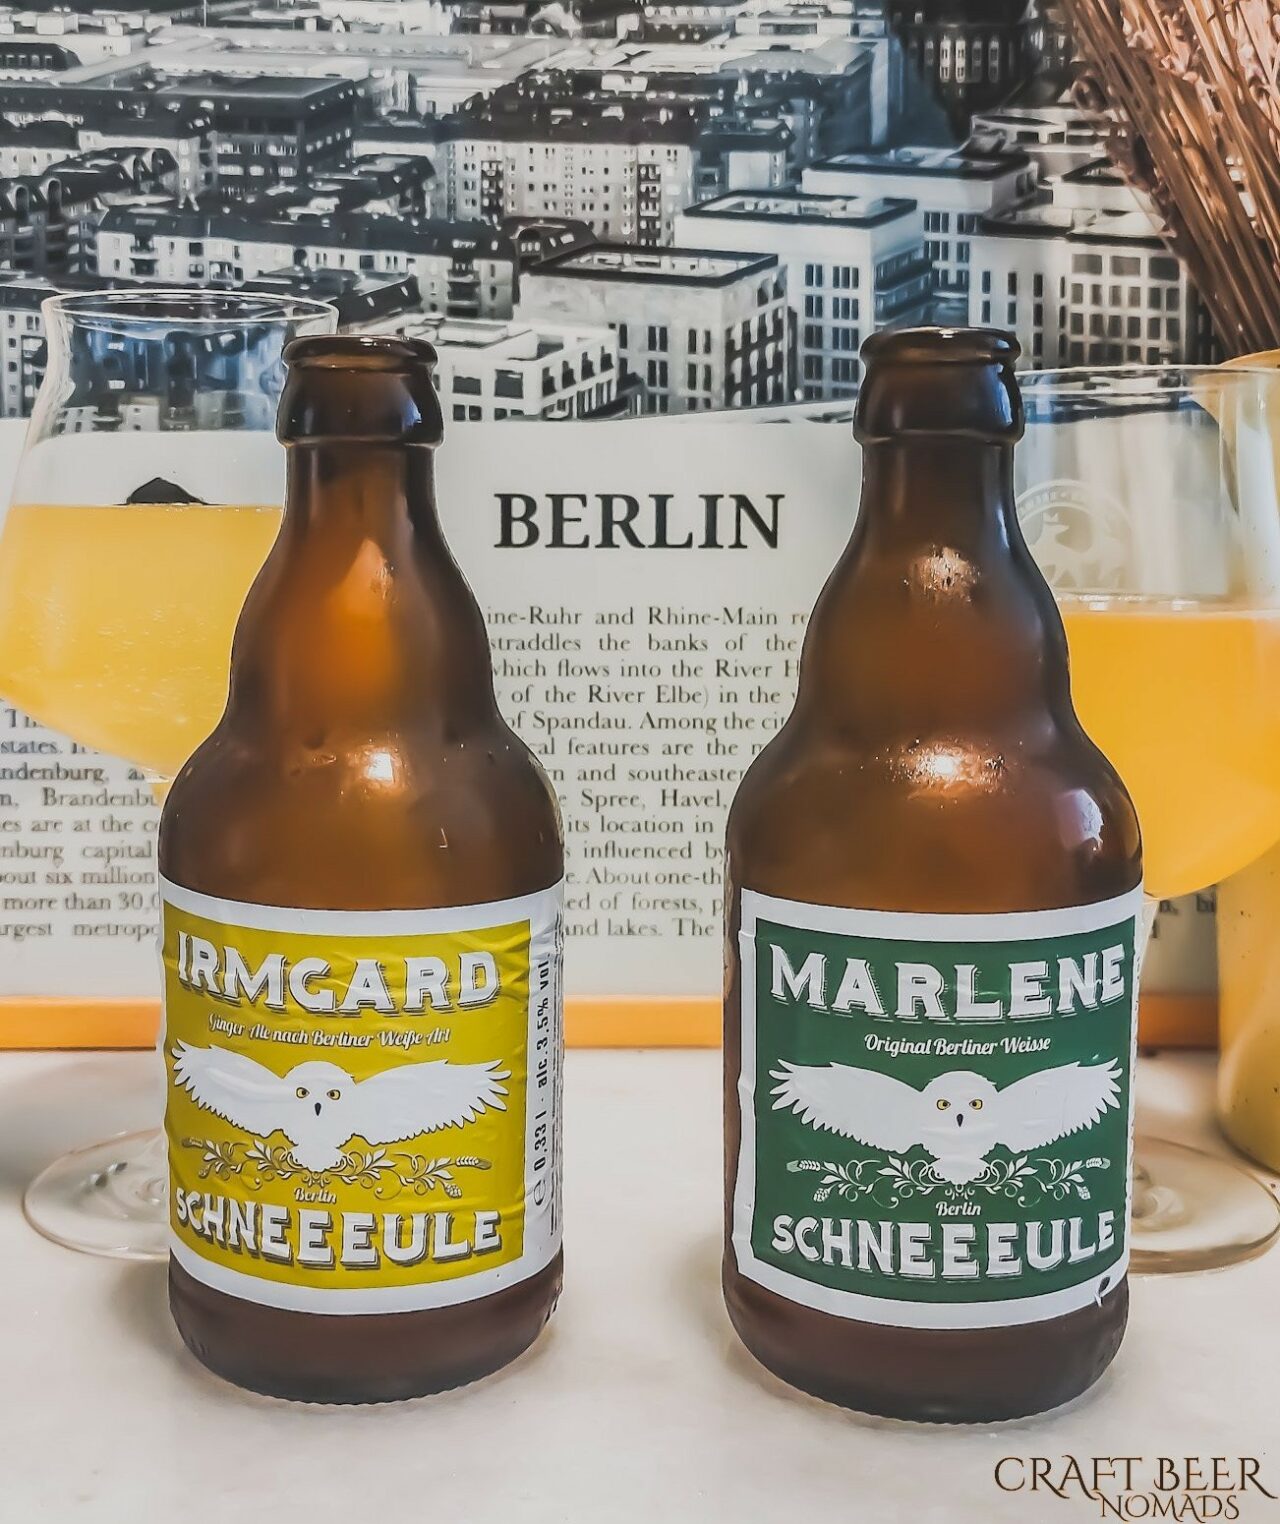 Berliner Weisse beers by Schneeule, Berlin | Craft beer in Berlin | Craft Beer Nomads blog